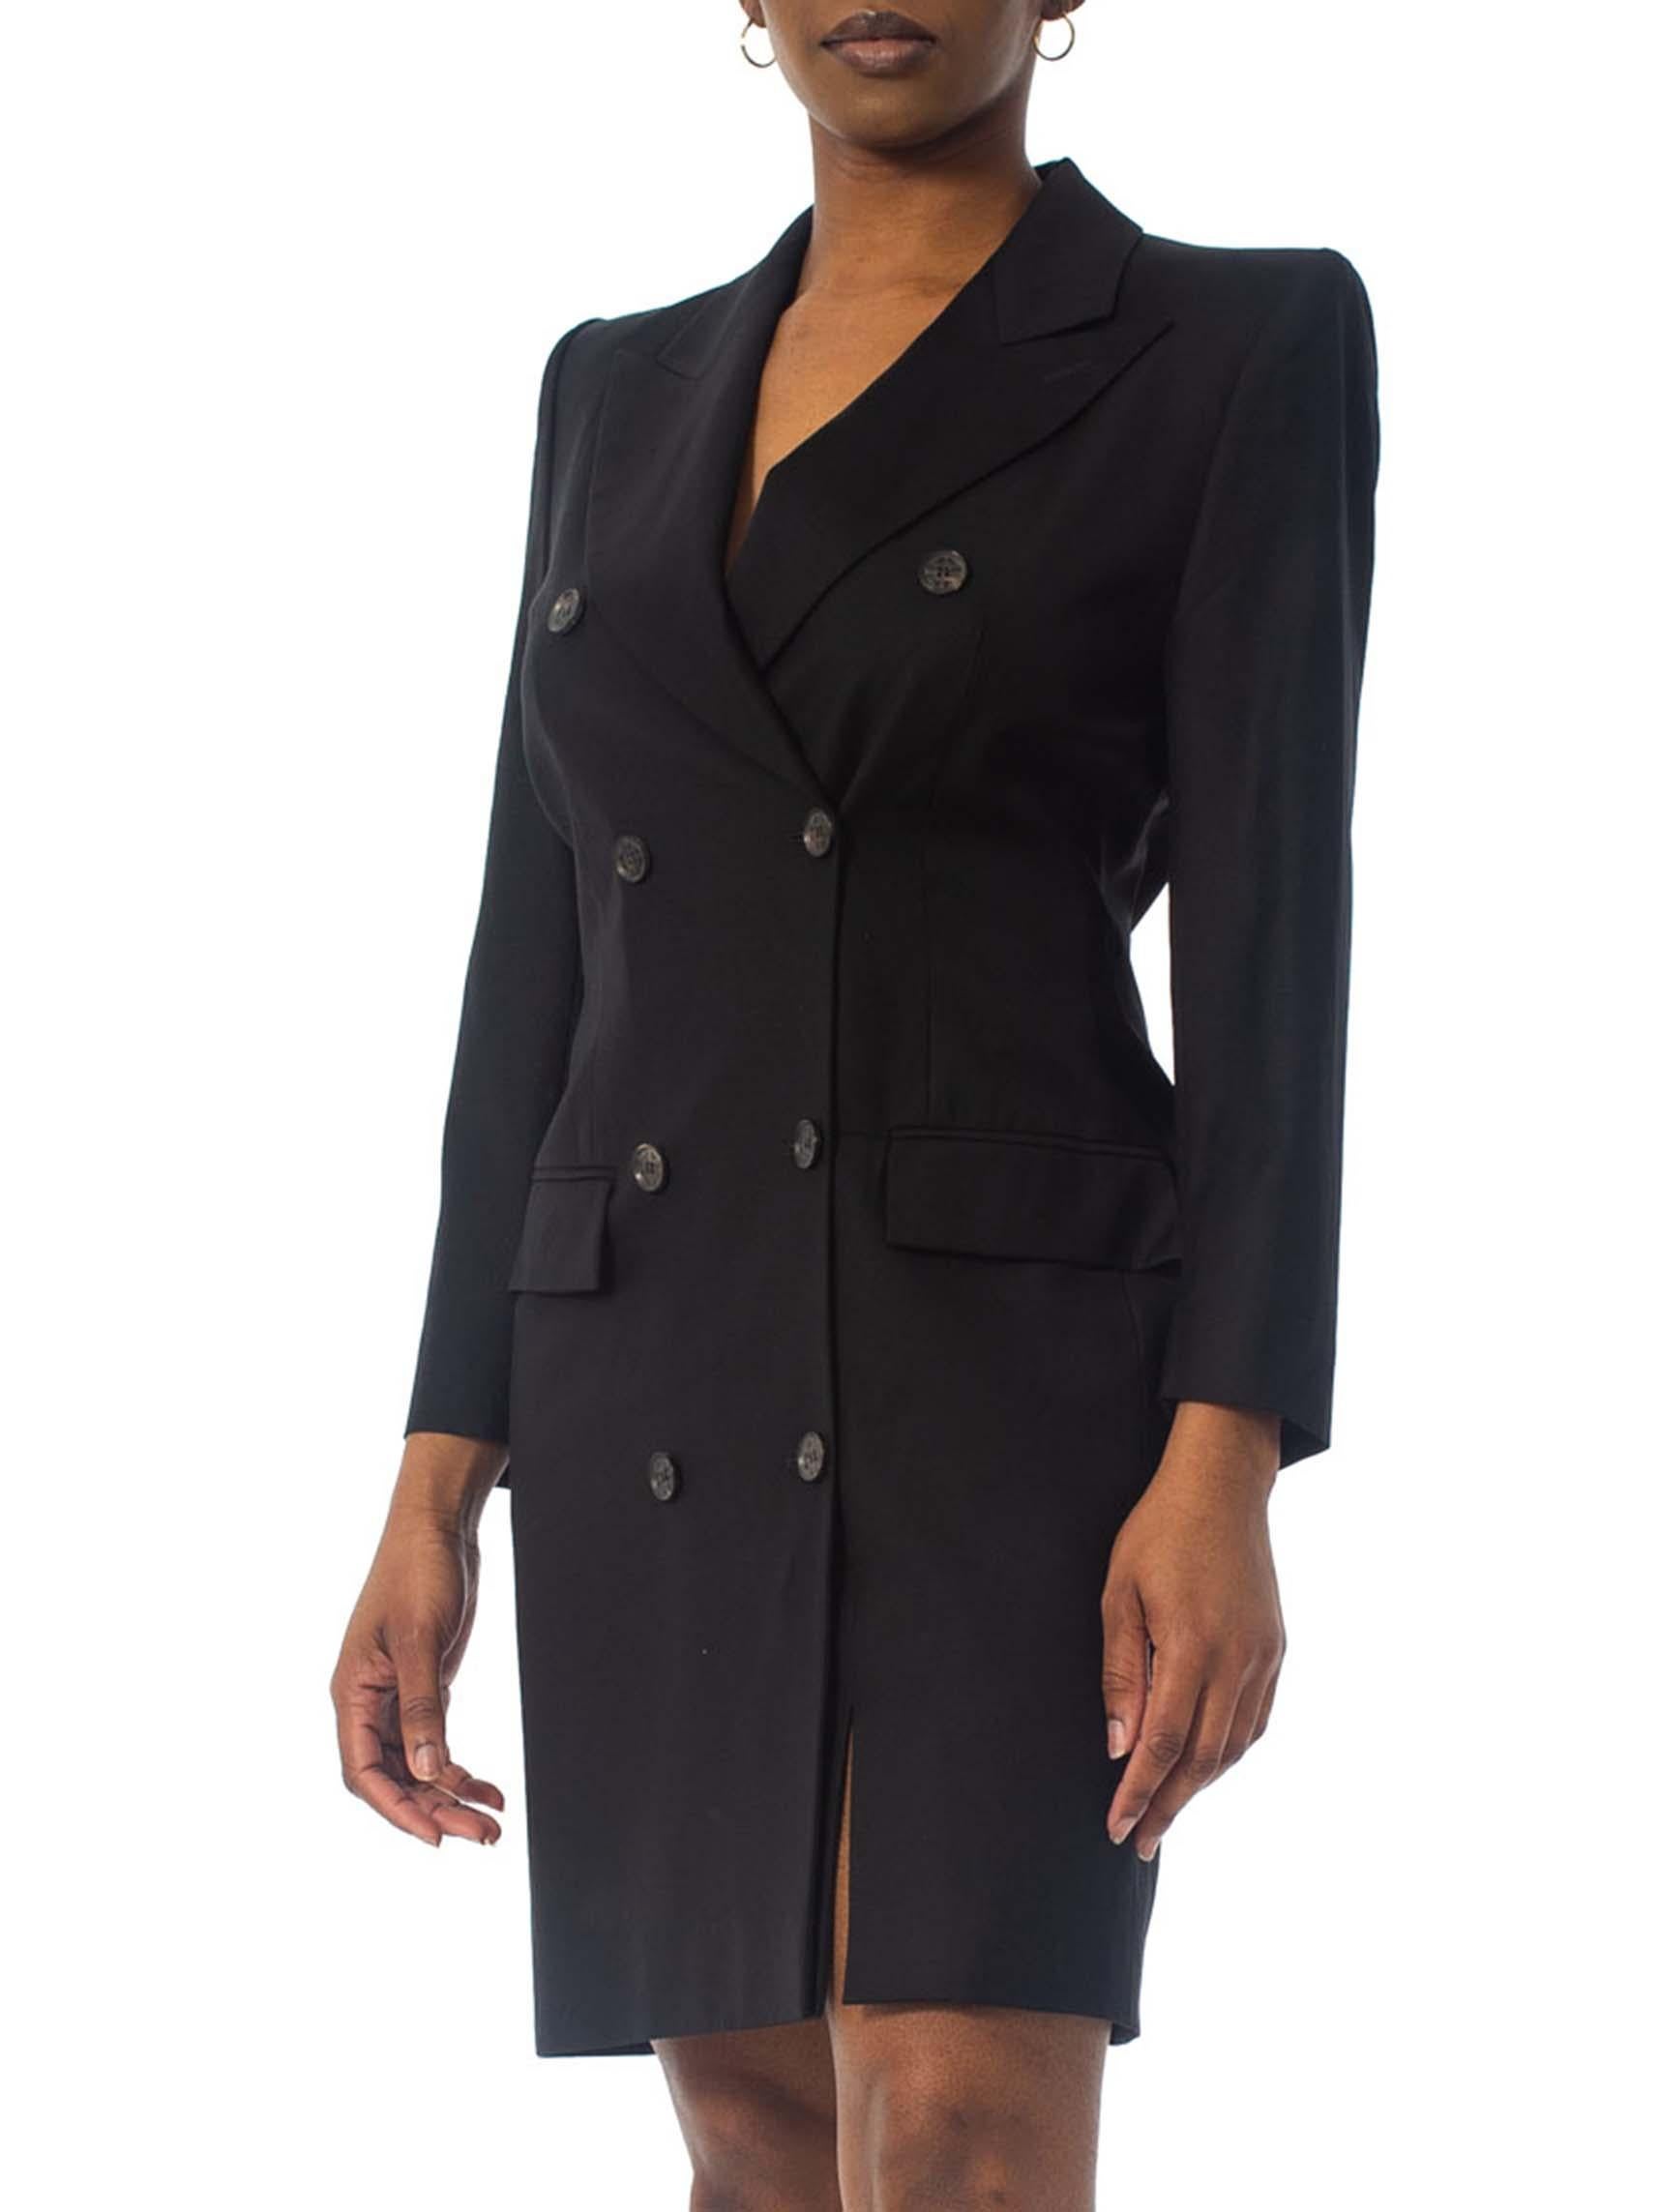 Women's 1990S ALEXANDER MCQUEEN GIVENCHY Black Wool Blazer Coat Dress With Slit & Pagod